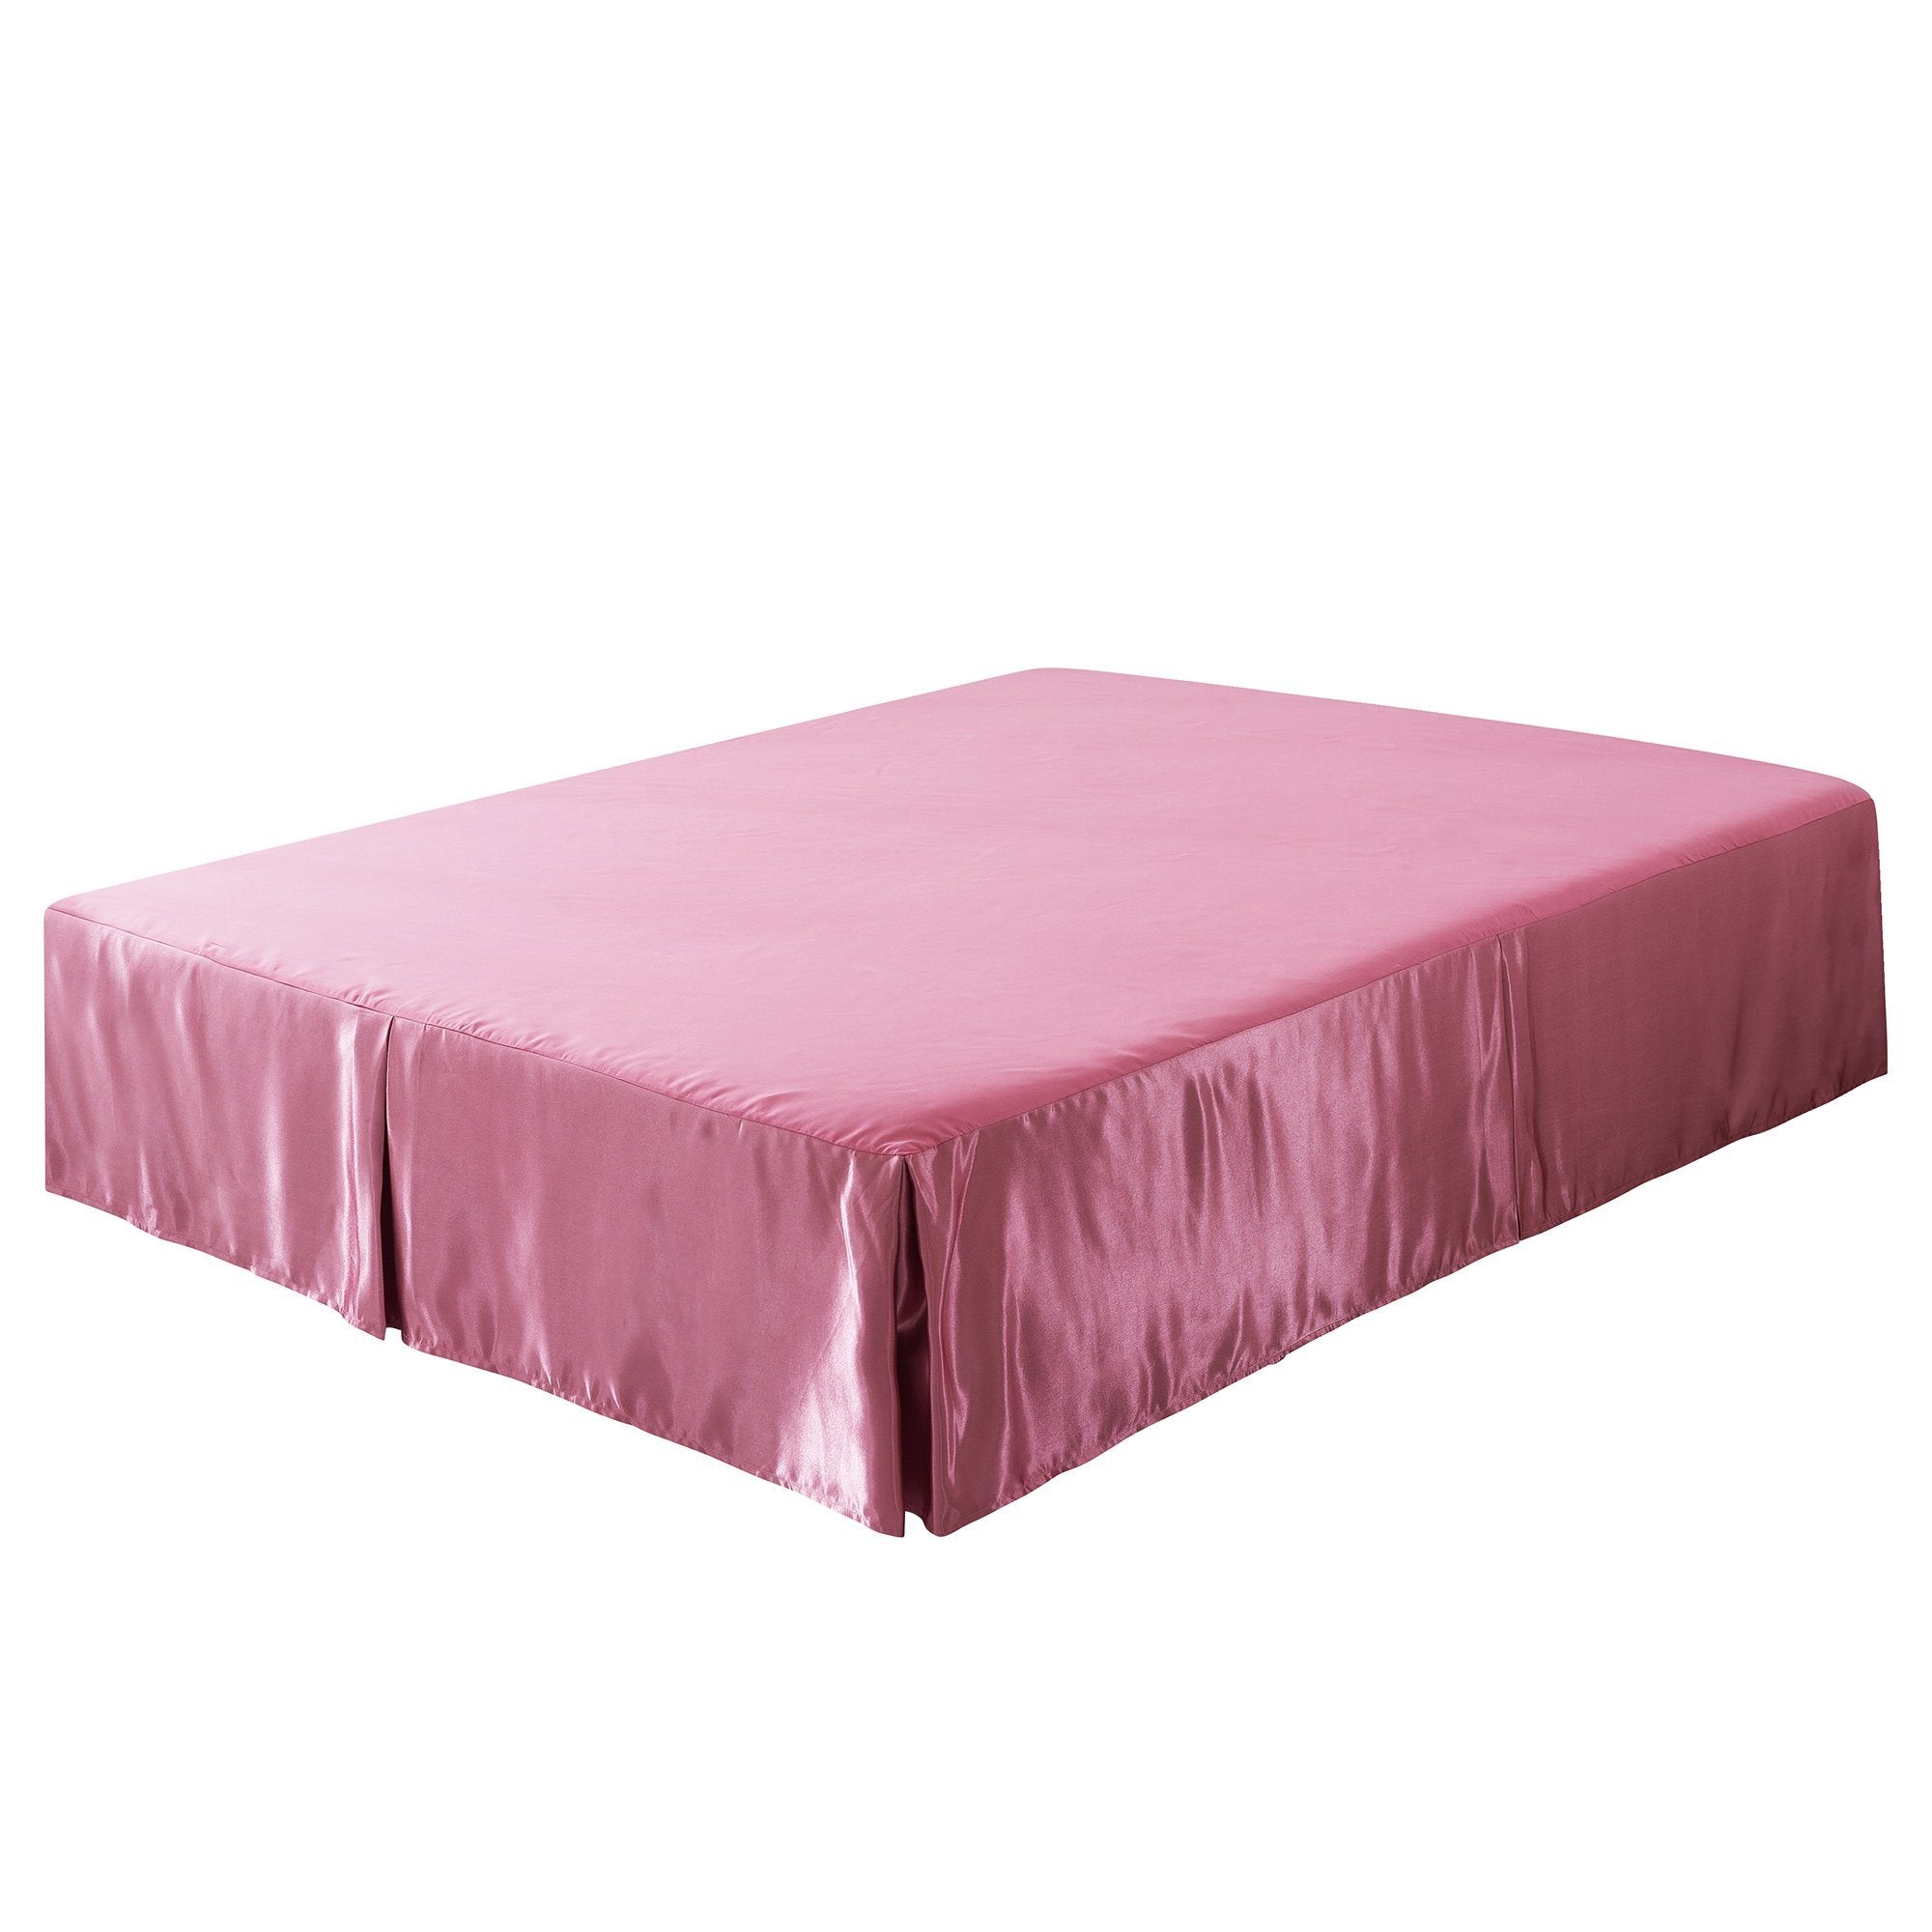 Tache Satin Pink Royal Princess Dream Tailored Platform 14" Bed Skirt Dust Ruffle (BM1227) - Tache Home Fashion